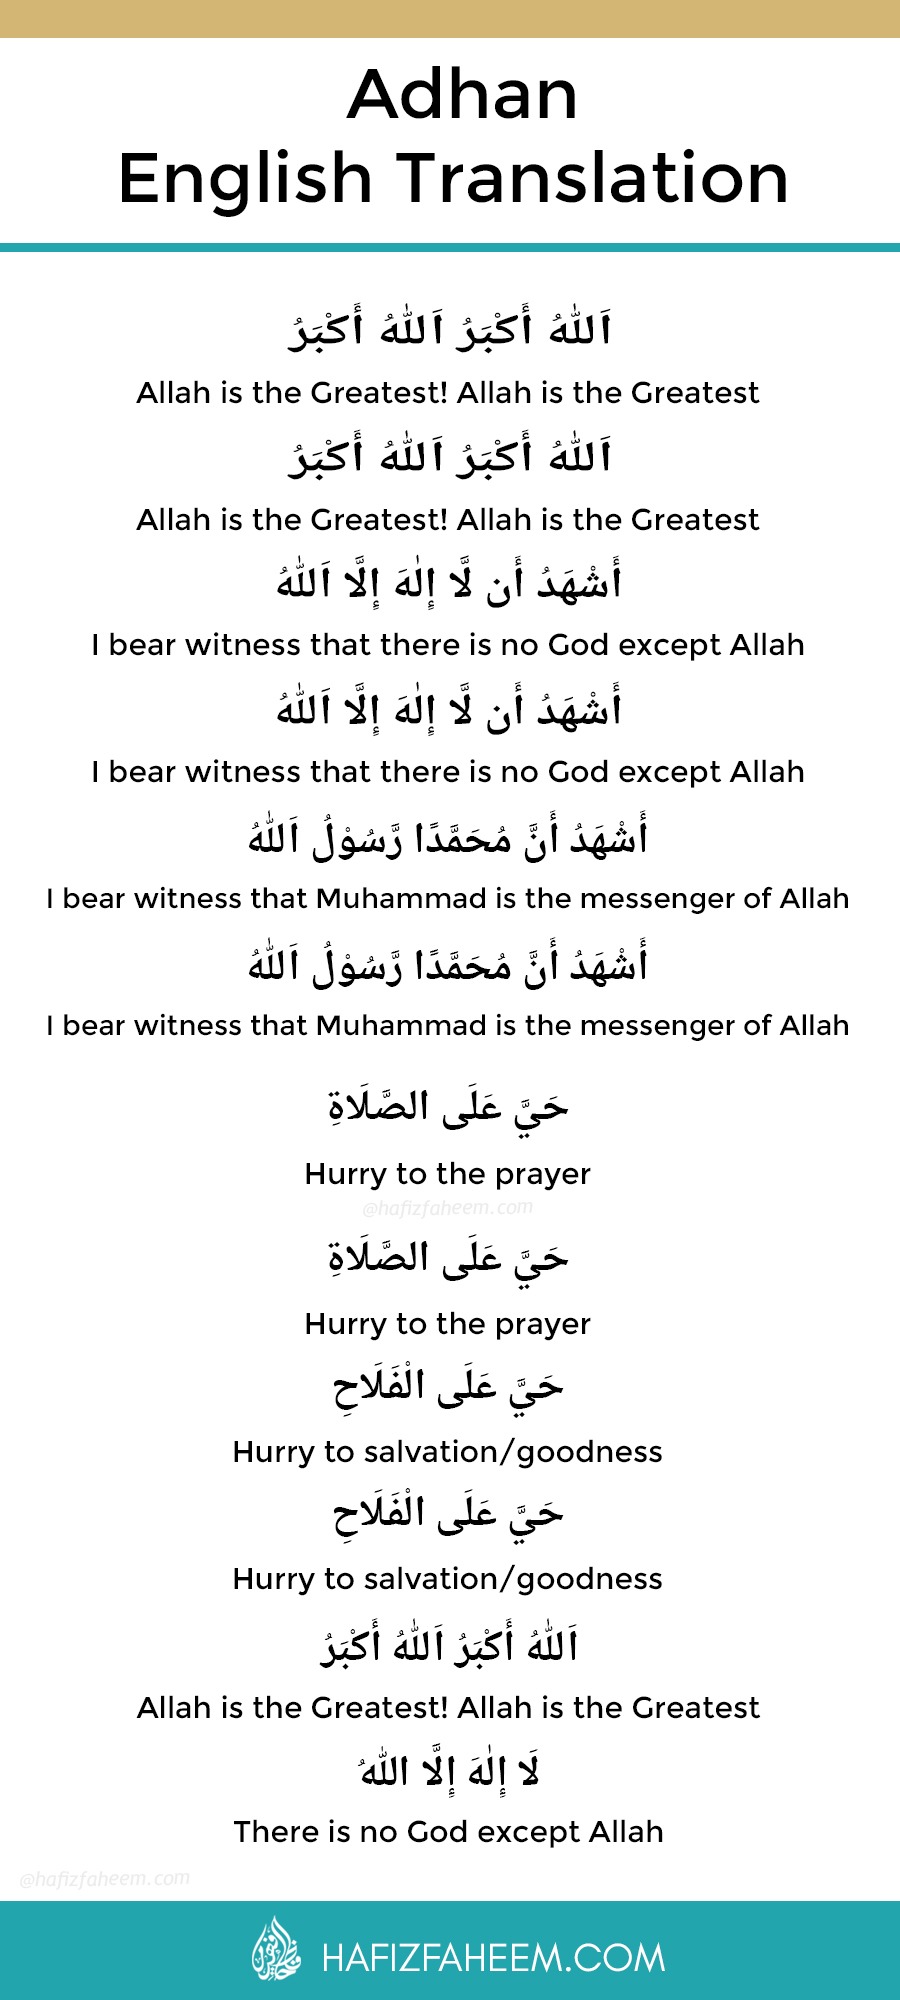 Исламски позив на молитву (езан) преведен на енглески